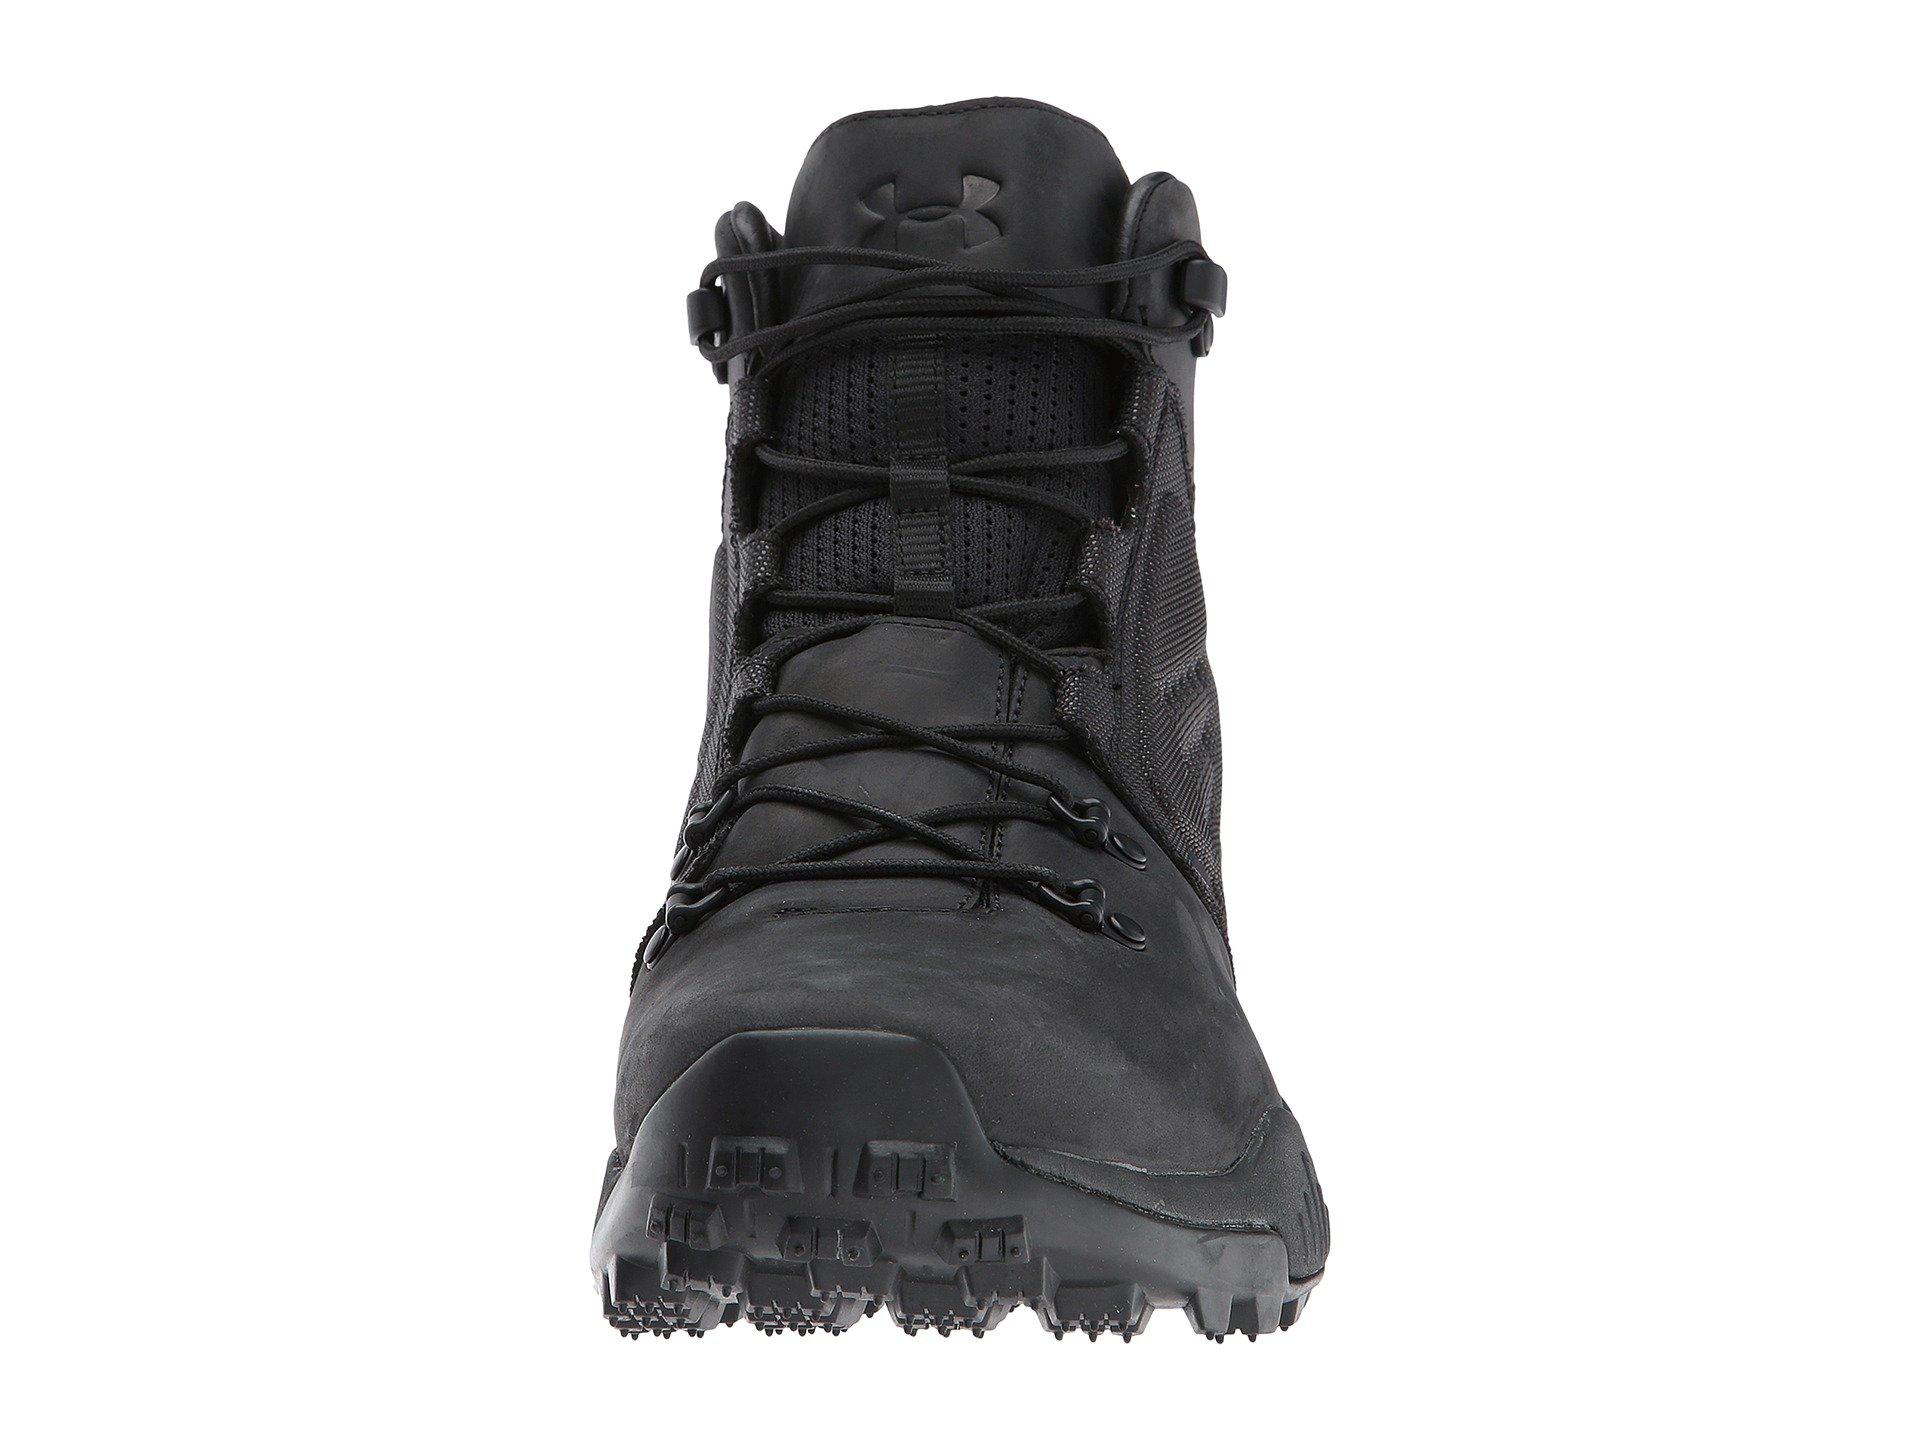 Under Armour Ua Newell Ridge Mid Gtx Leather in Black/Black/Black (Black)  for Men | Lyst